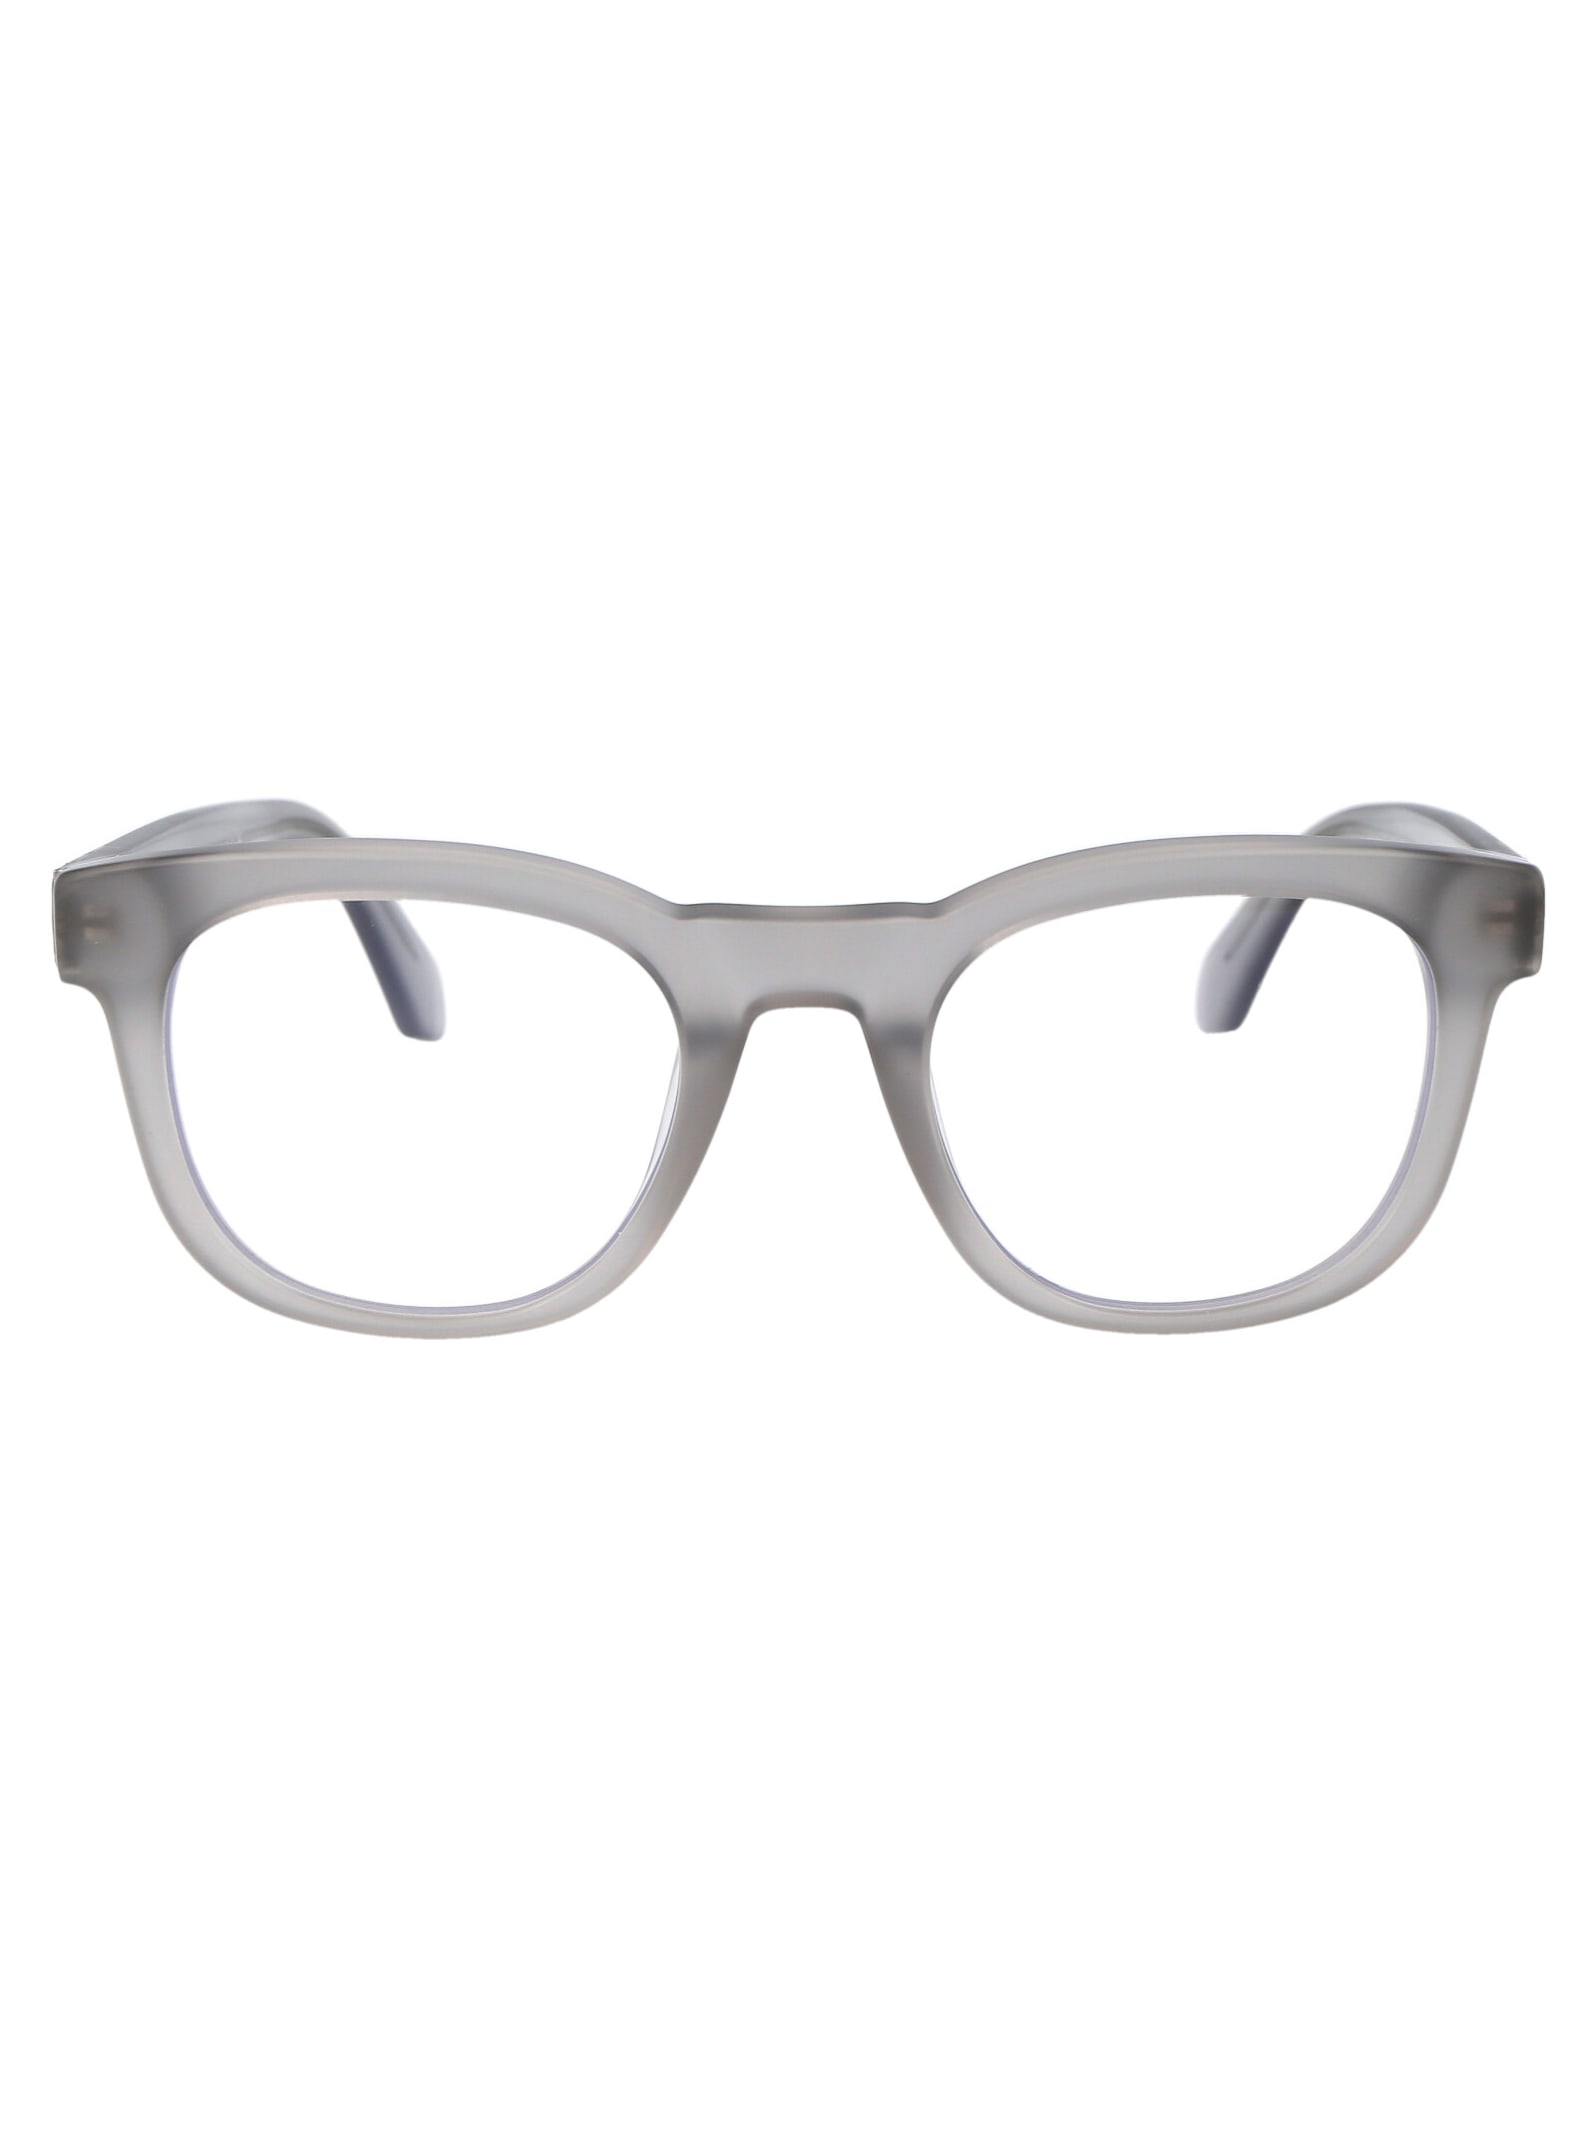 Optical Style 71 Glasses